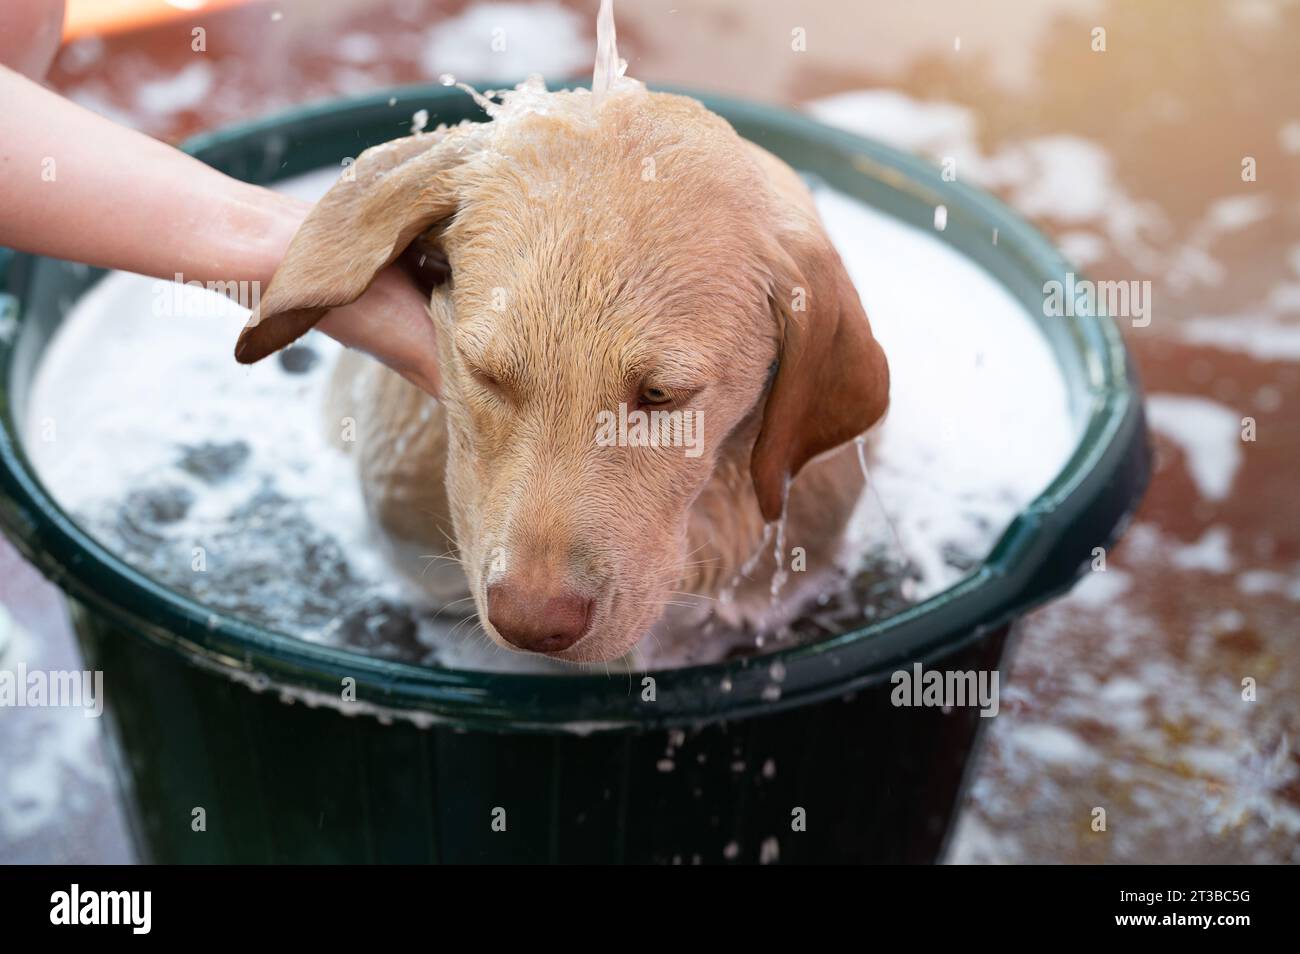 Washing brown labrador dog in foamy bath headshot view Stock Photo